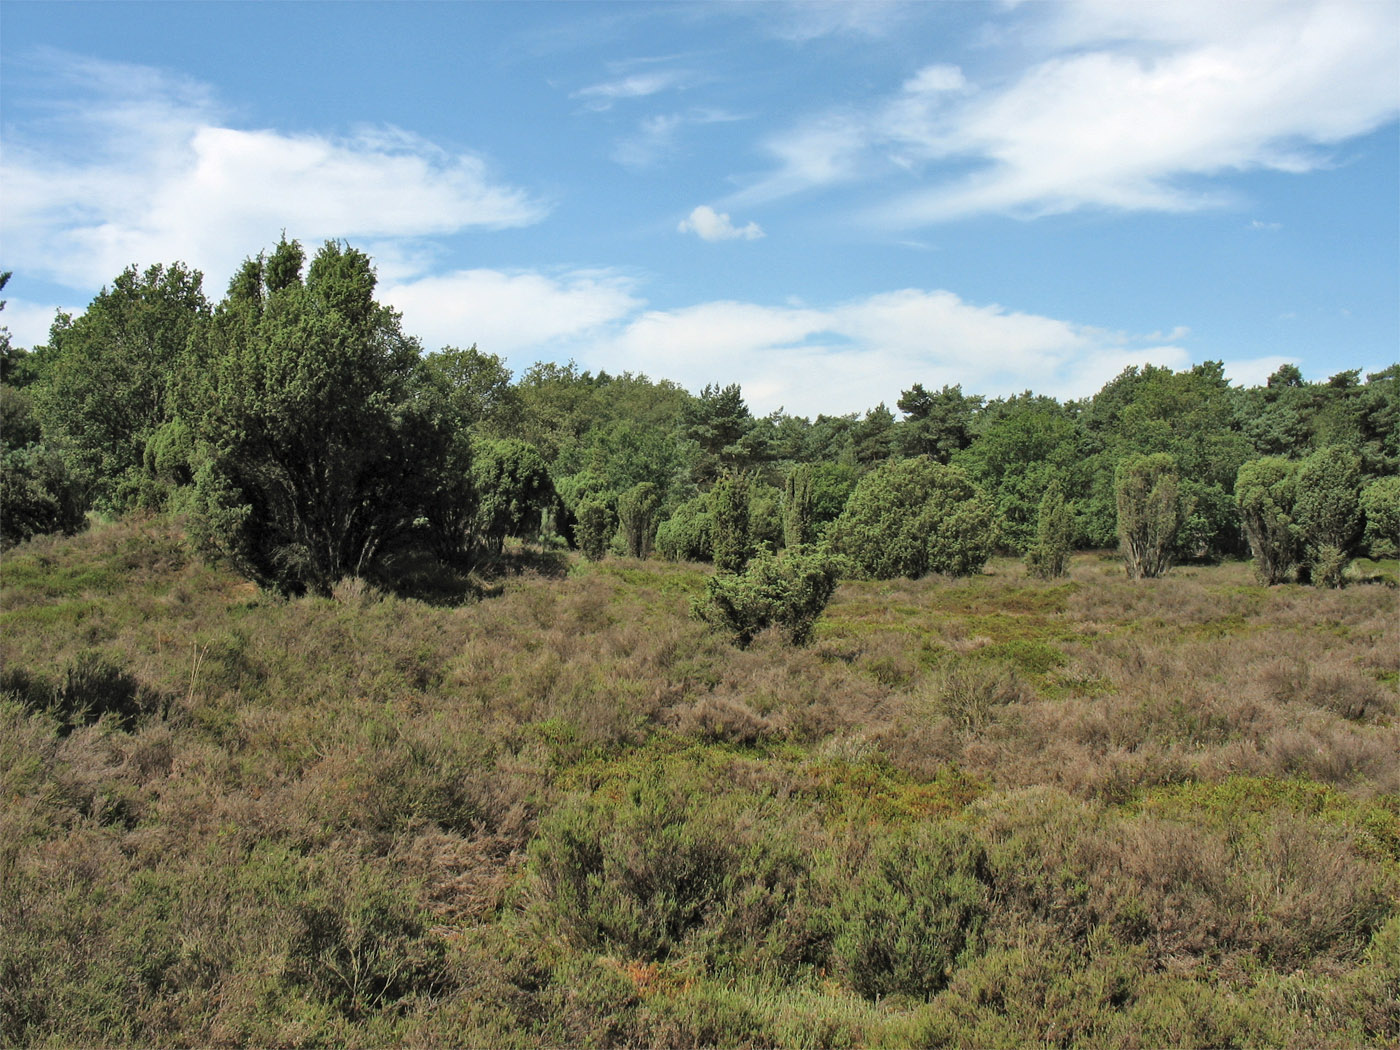 Dwingelderveld, изображение ландшафта.